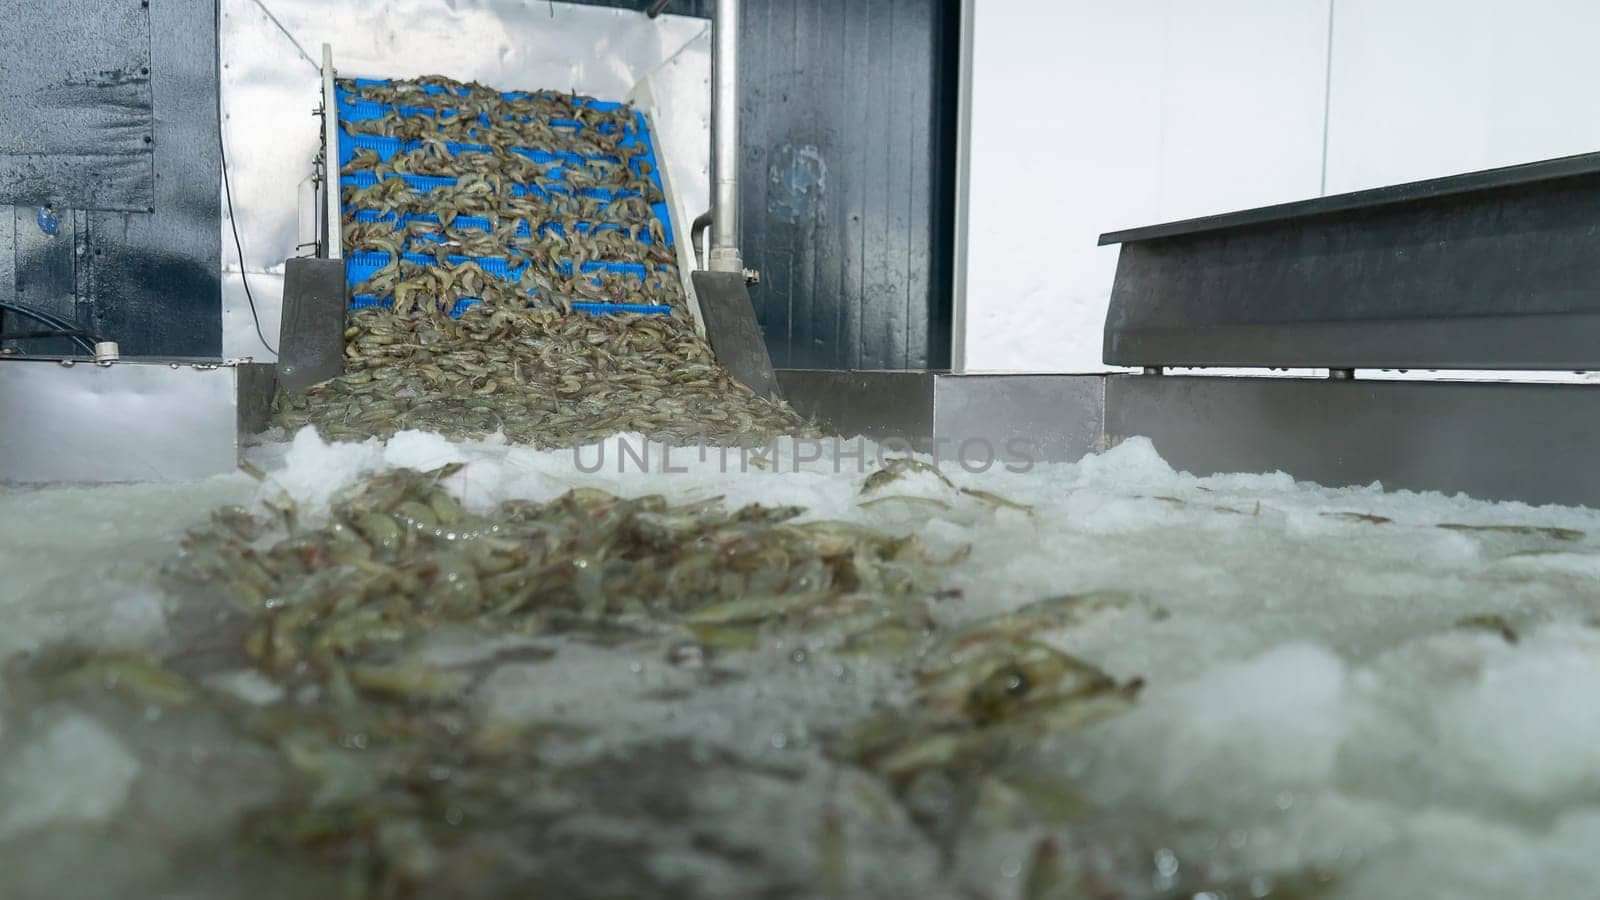 Conveyor transporting white shrimp in a tank of frozen water by cfalvarez